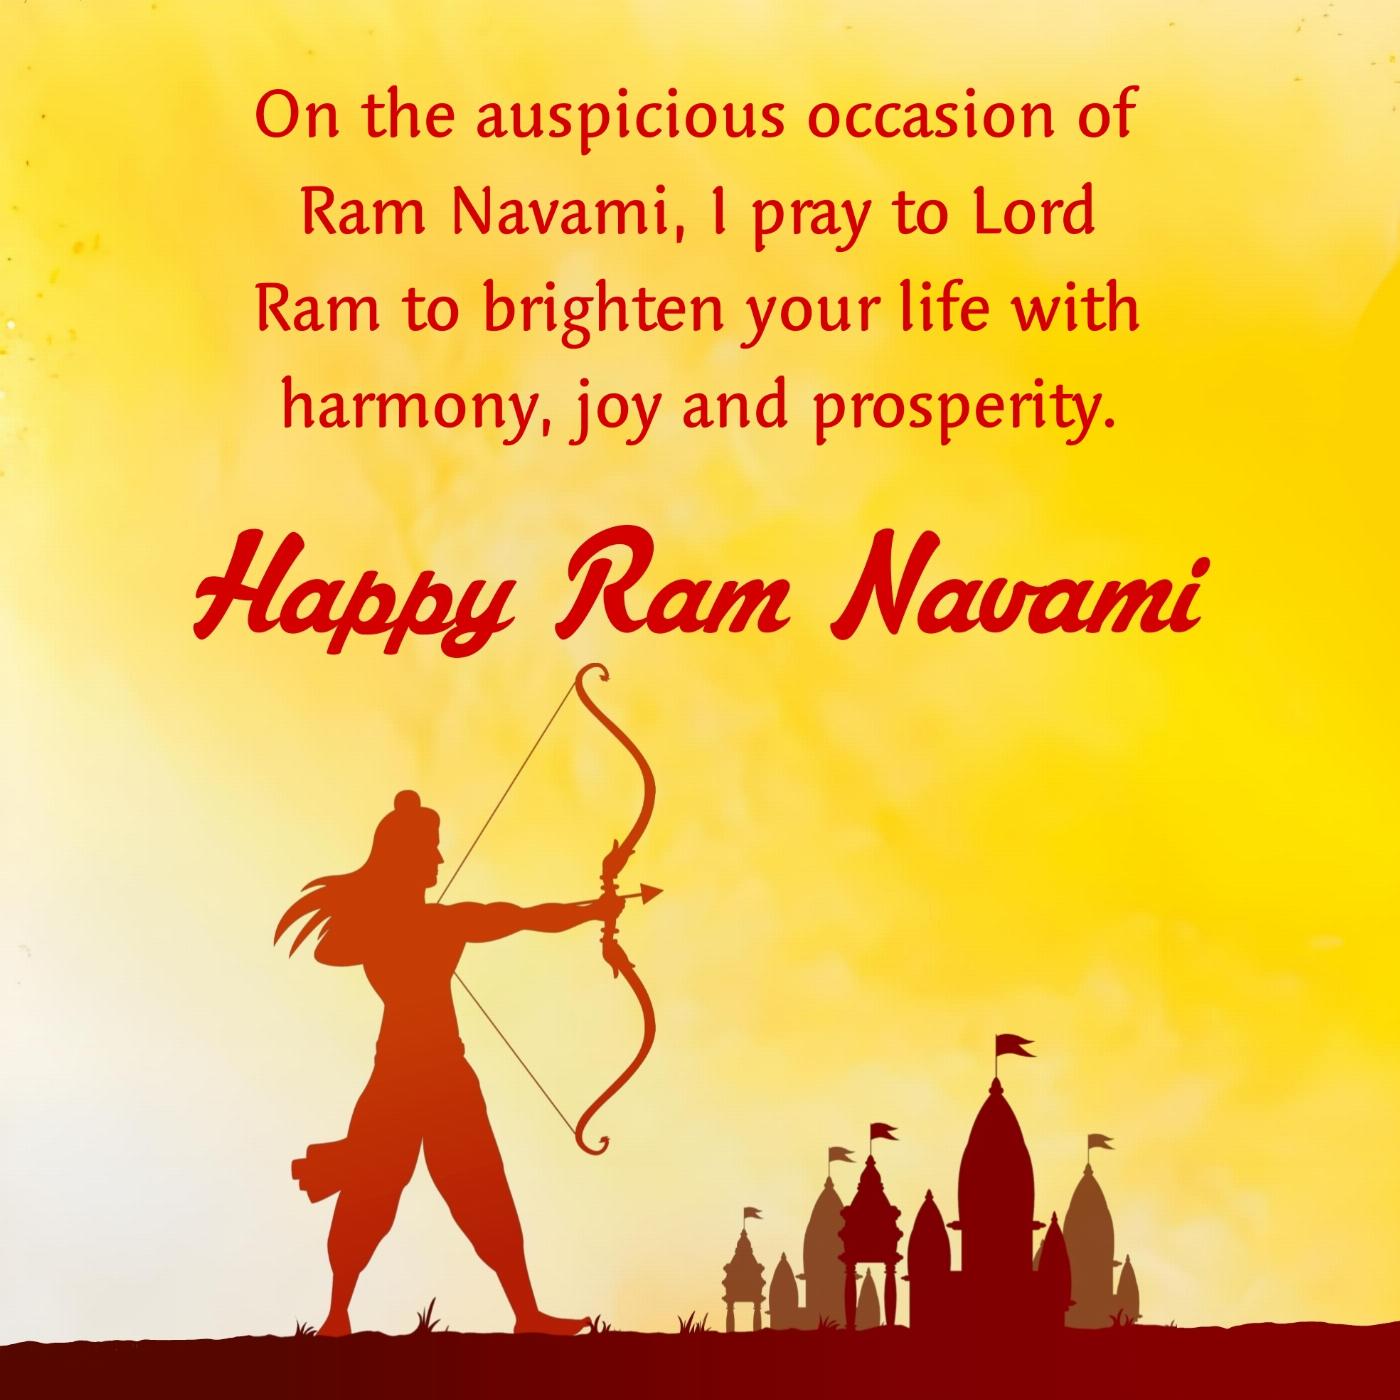 On the auspicious occasion of Ram Navami I pray to Lord Ram